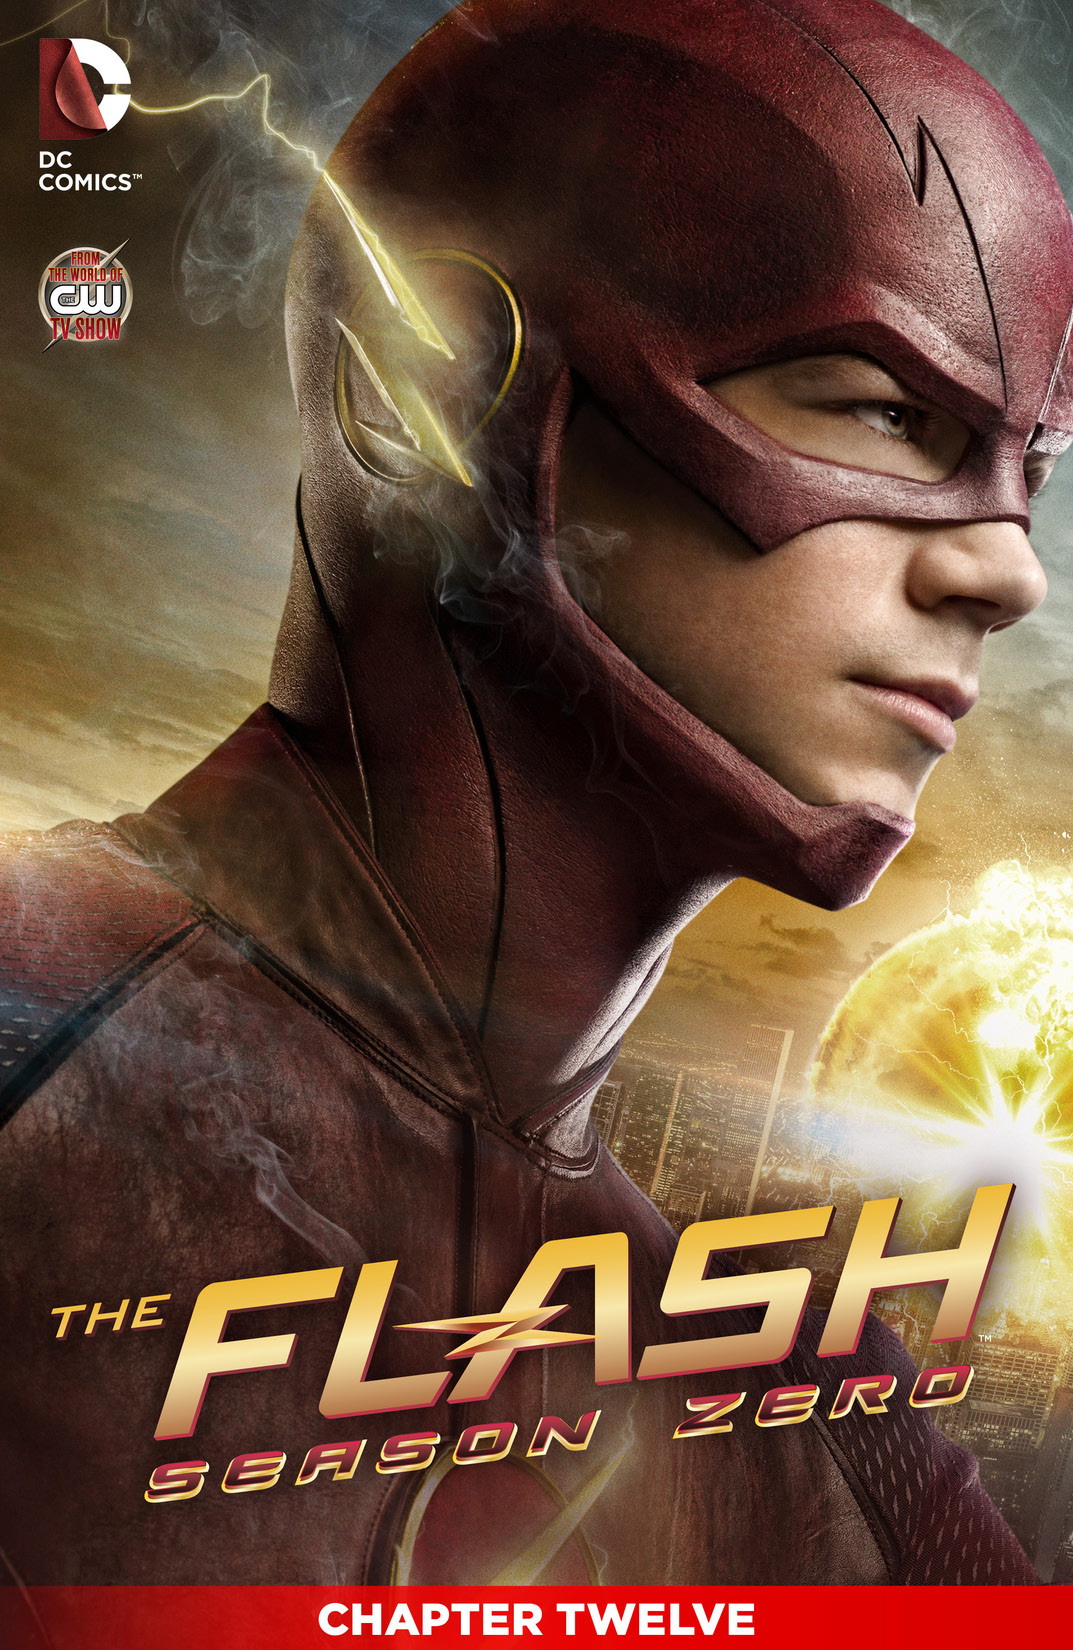 The Flash: Season Zero #12 preview images